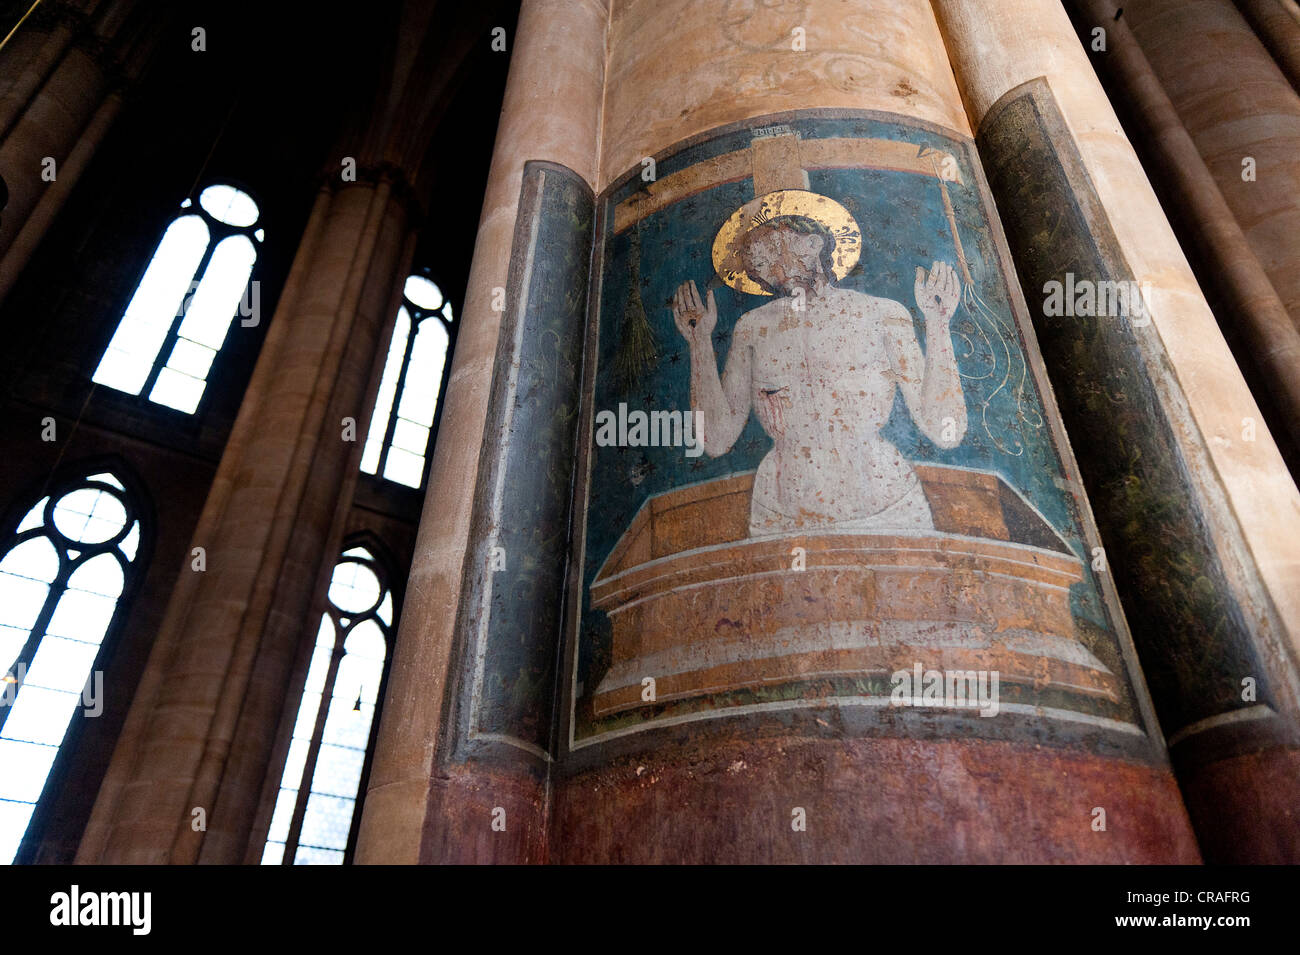 Representation of Christ, fresco on a column, St. Elisabeth's Church, Marburg, Hesse, Germany, Europe Stock Photo